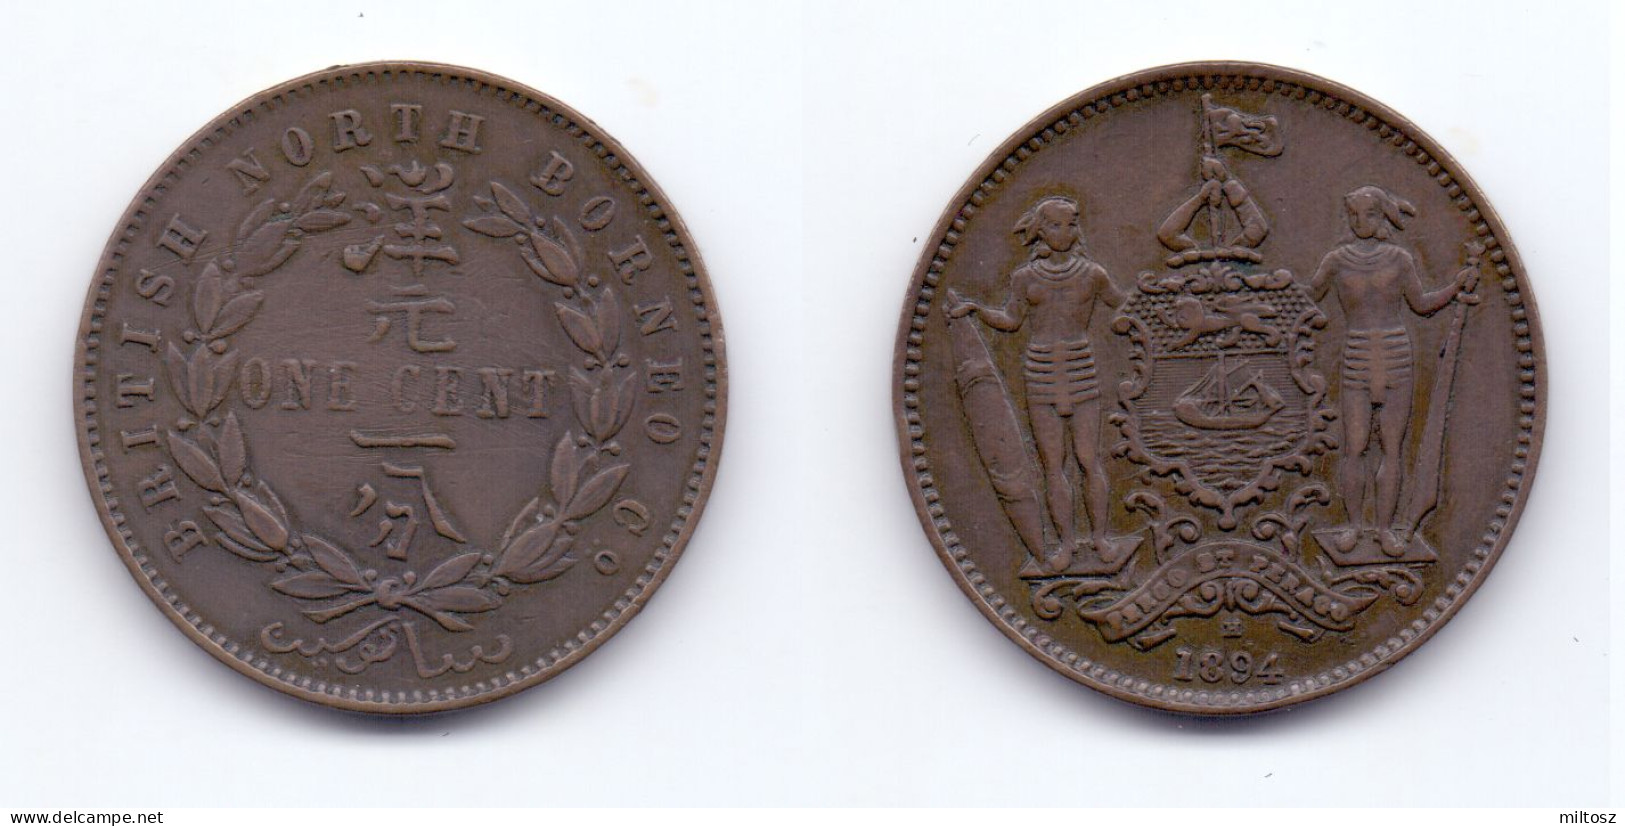 British North Borneo 1 Cent 1894 H - Malaysie